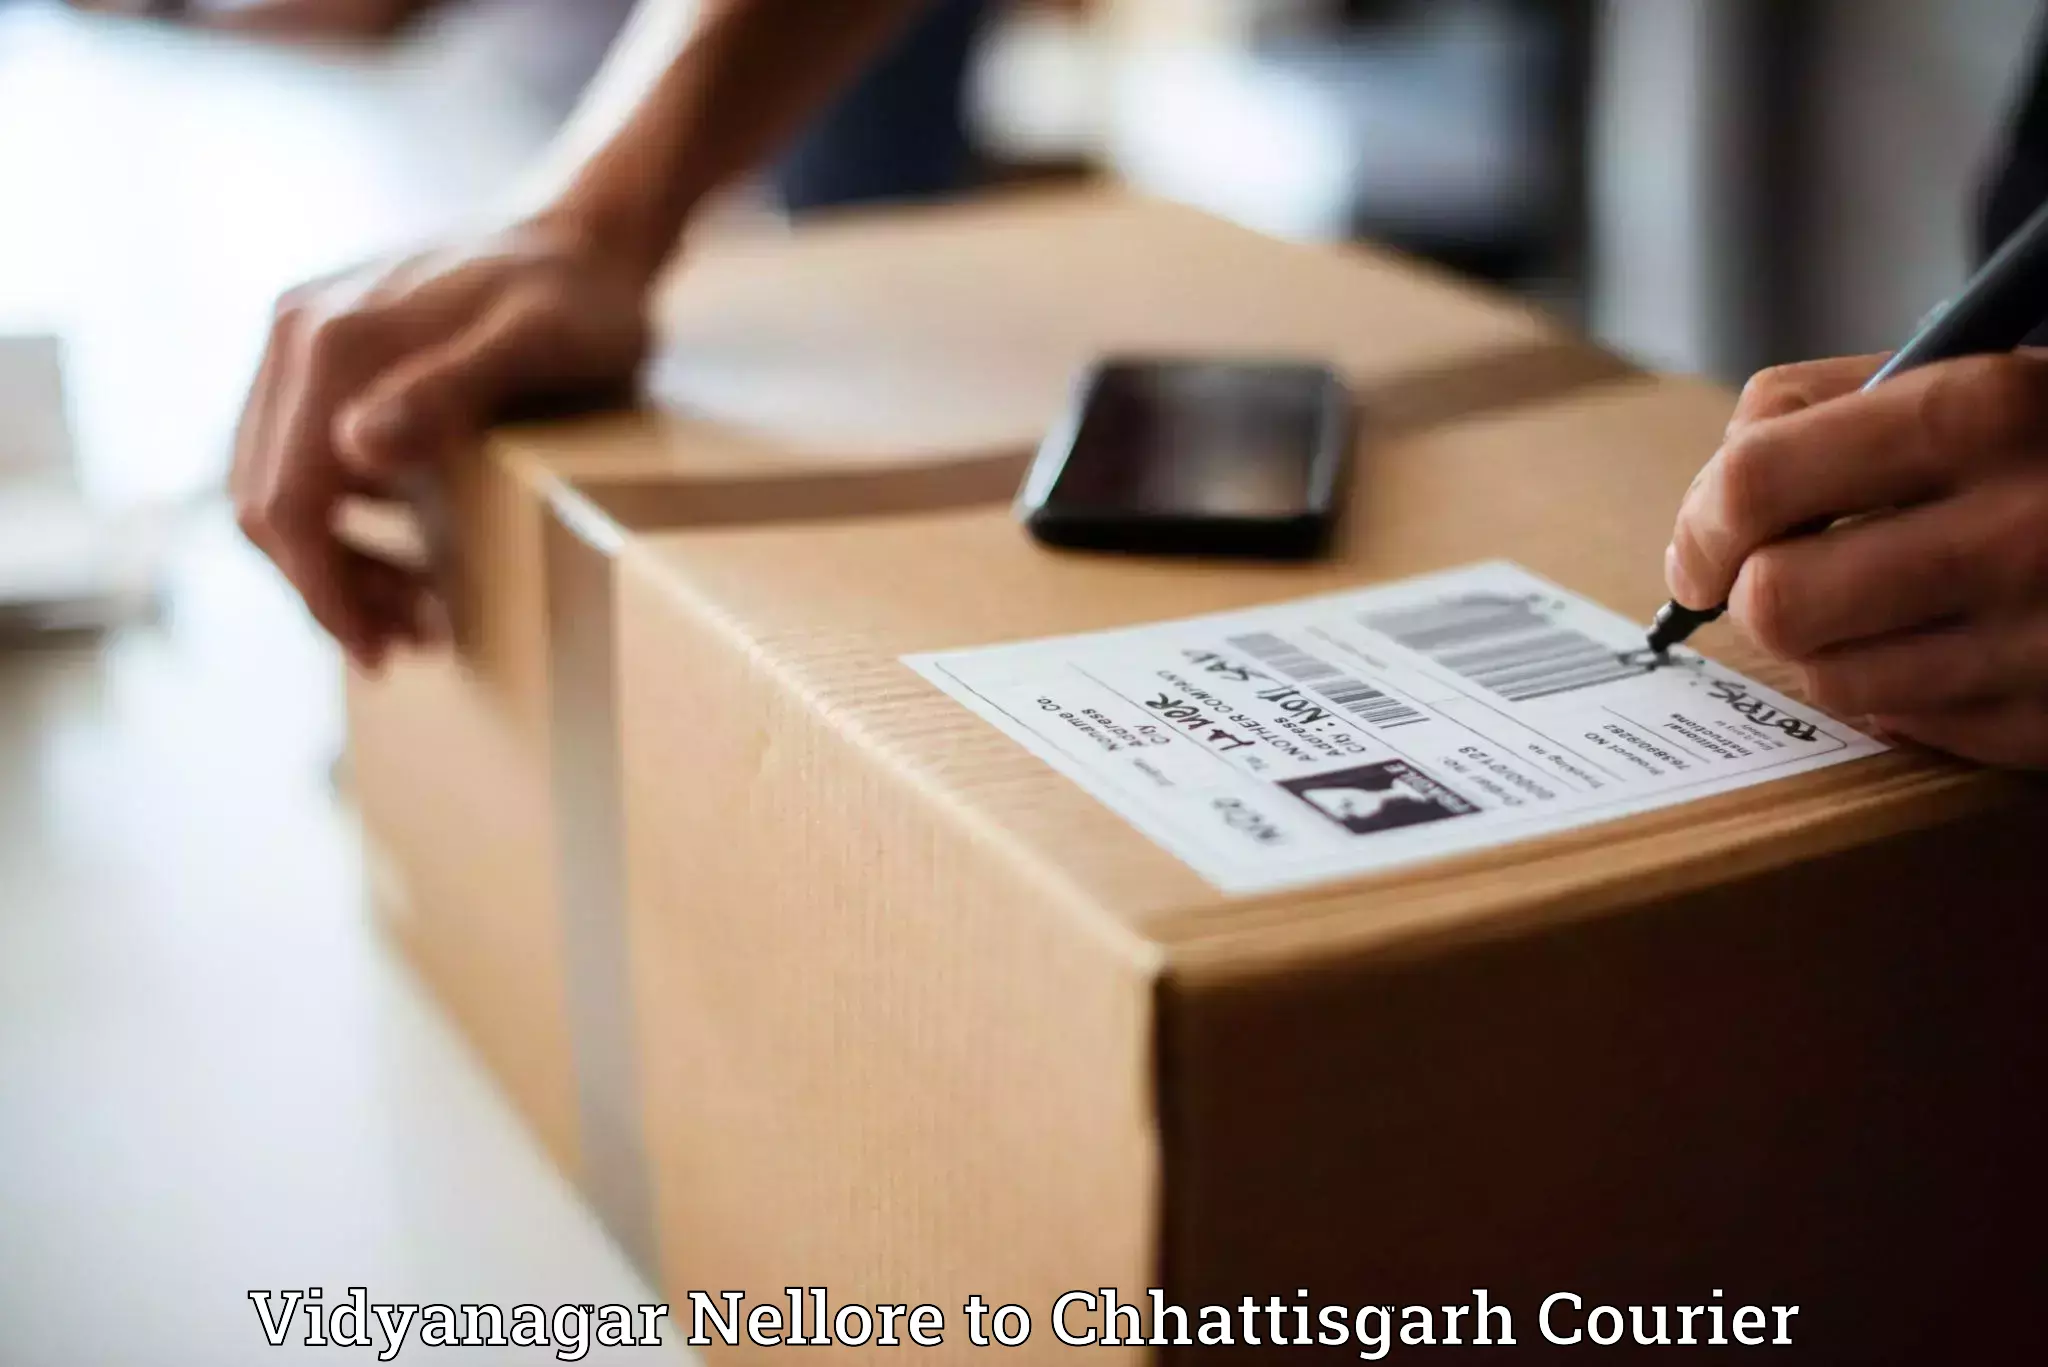 Package delivery network Vidyanagar Nellore to Berla